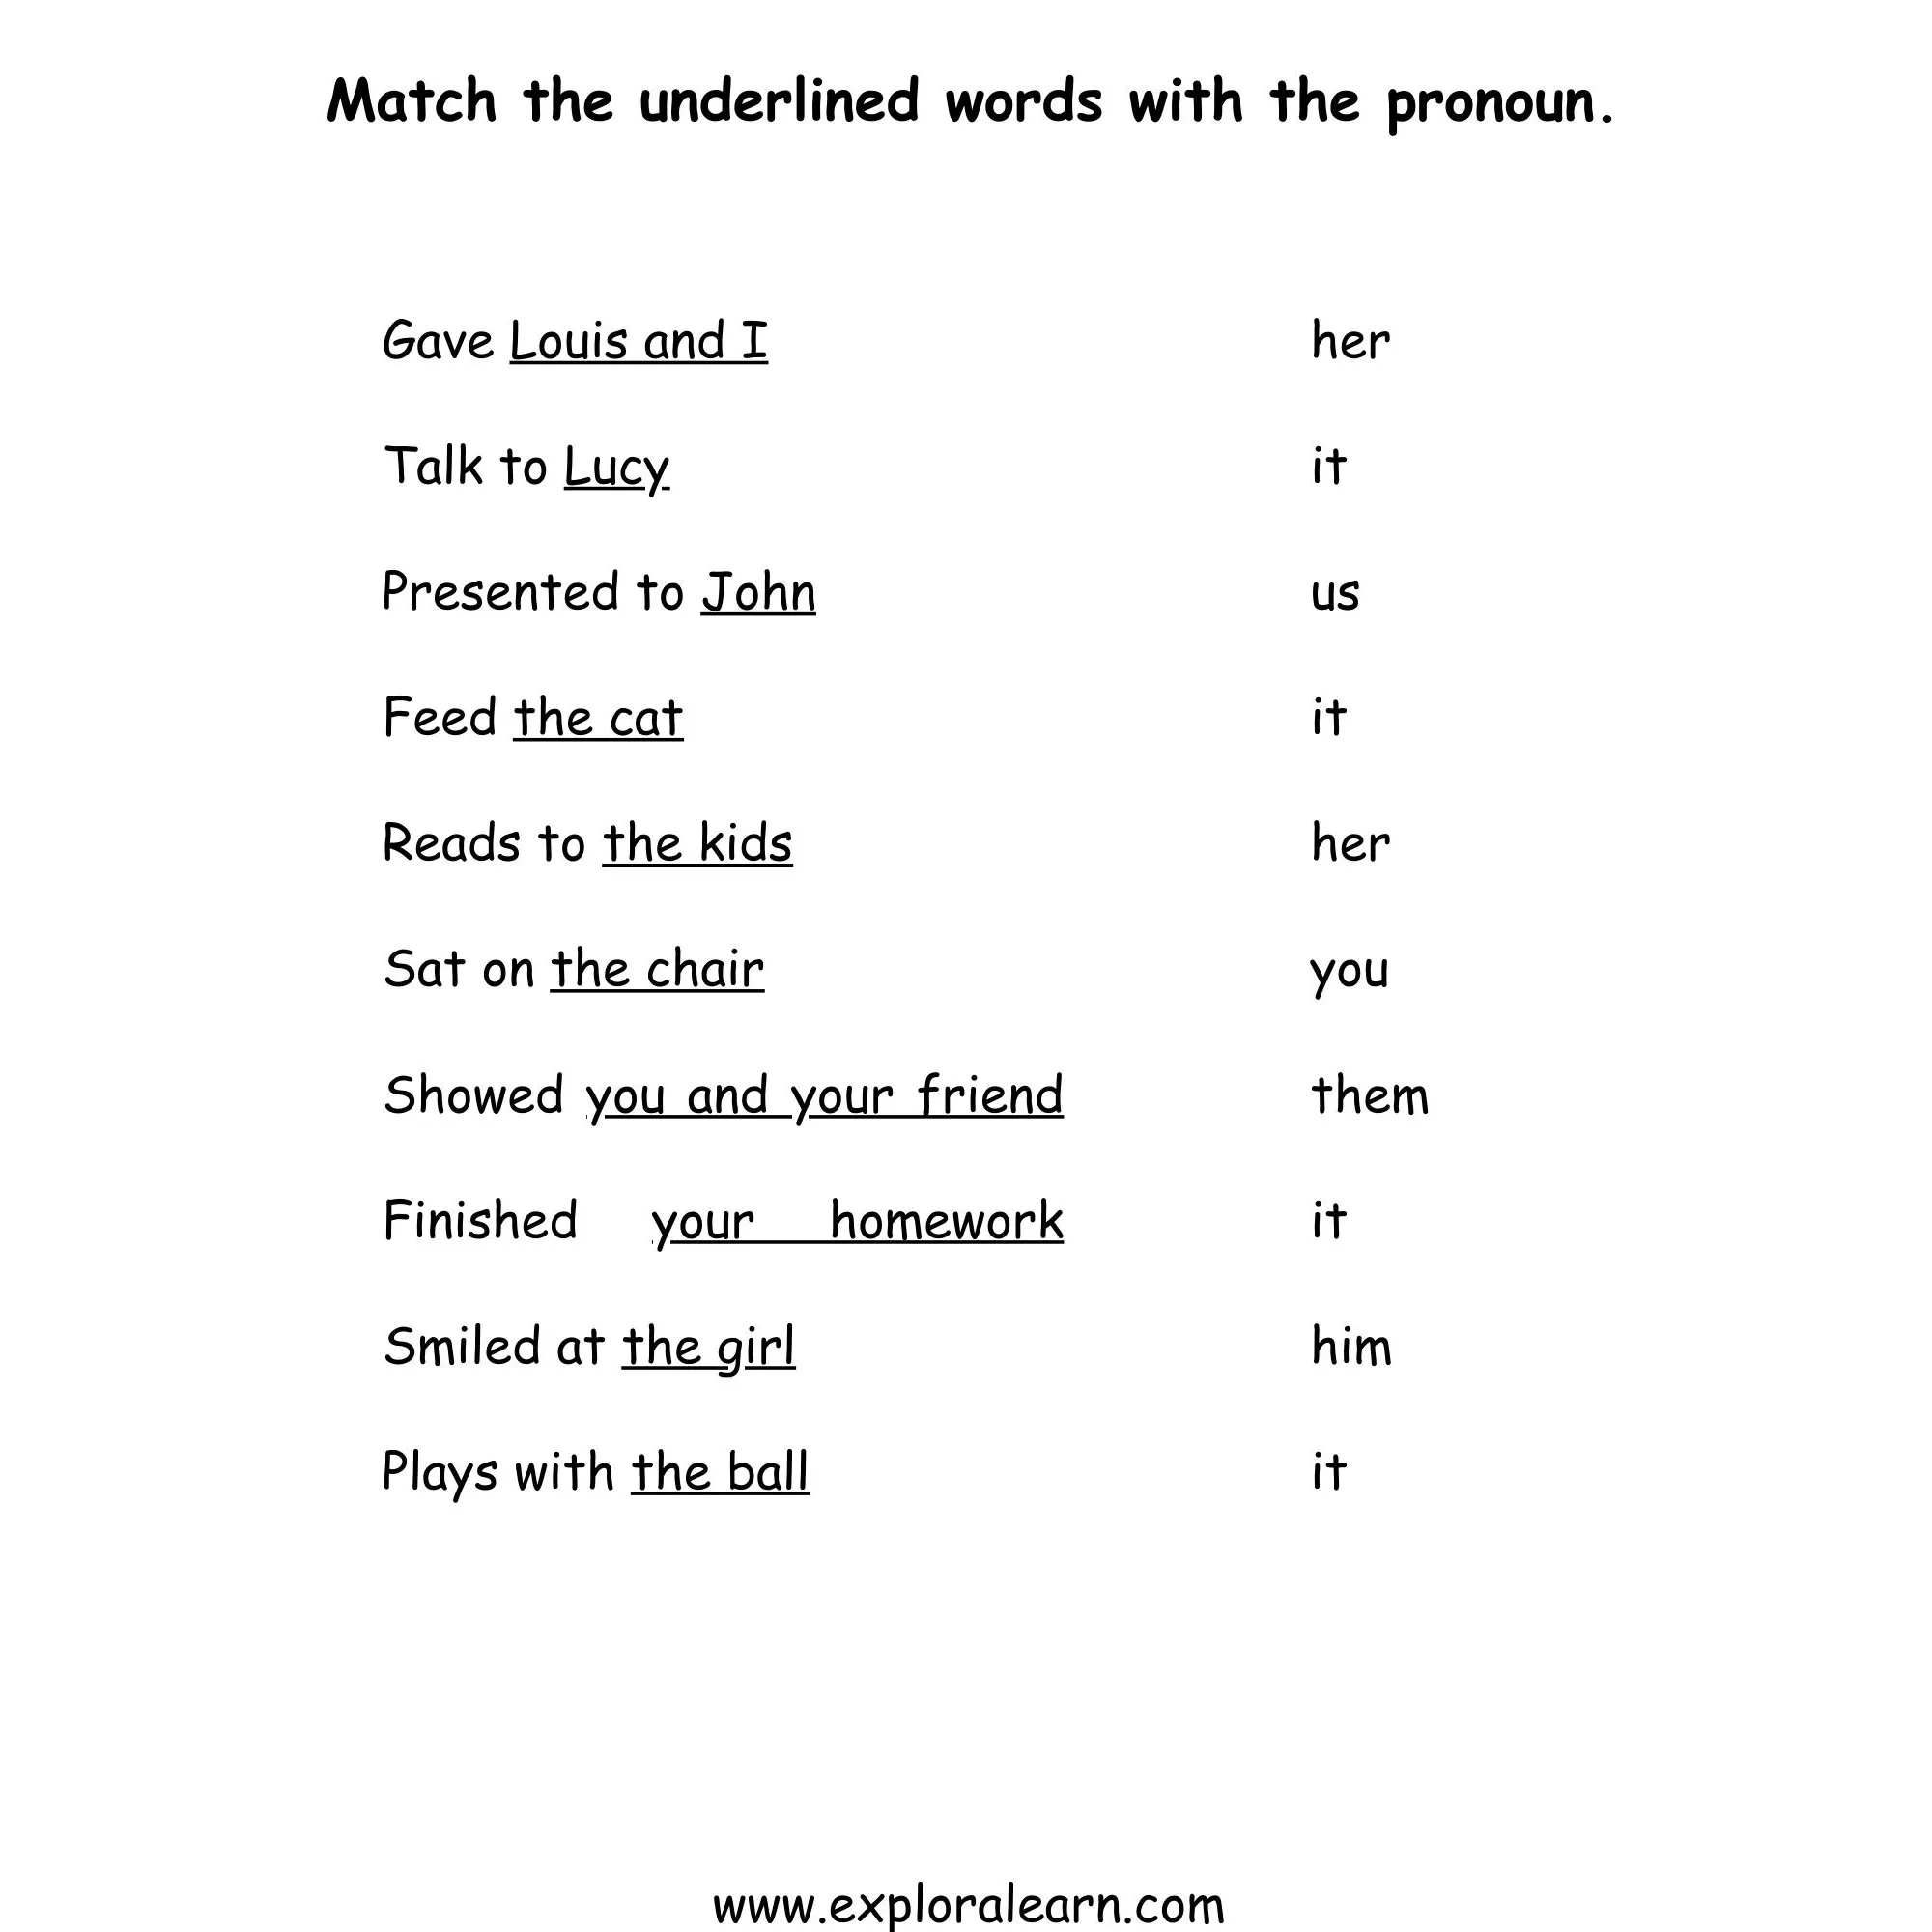 free-exploralearn-worksheets-class-1-english-grammar-worksheets-identify-pronoun